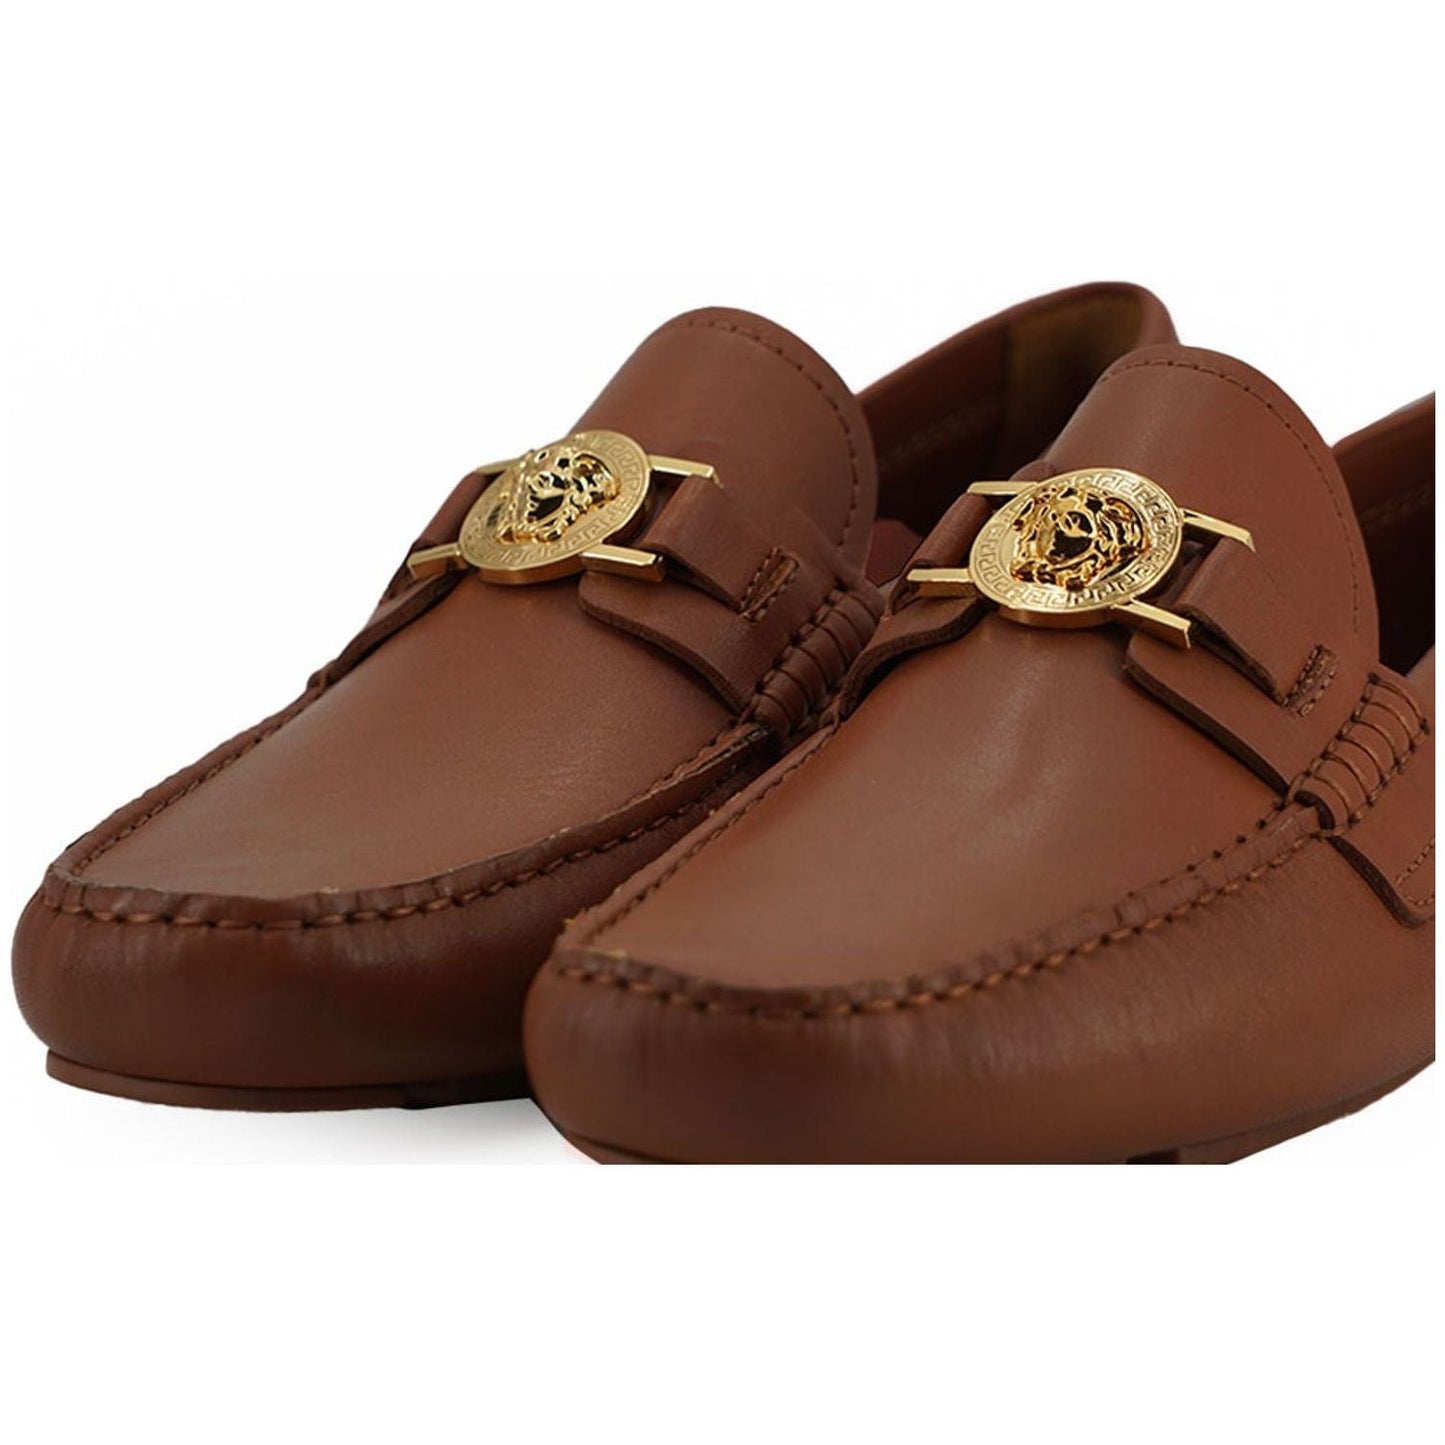 Versace Elegant Medusa-Embossed Leather Loafers natural-brown-calf-leather-loafers-shoes V70062-3-c78dd8f8-7d1.jpg